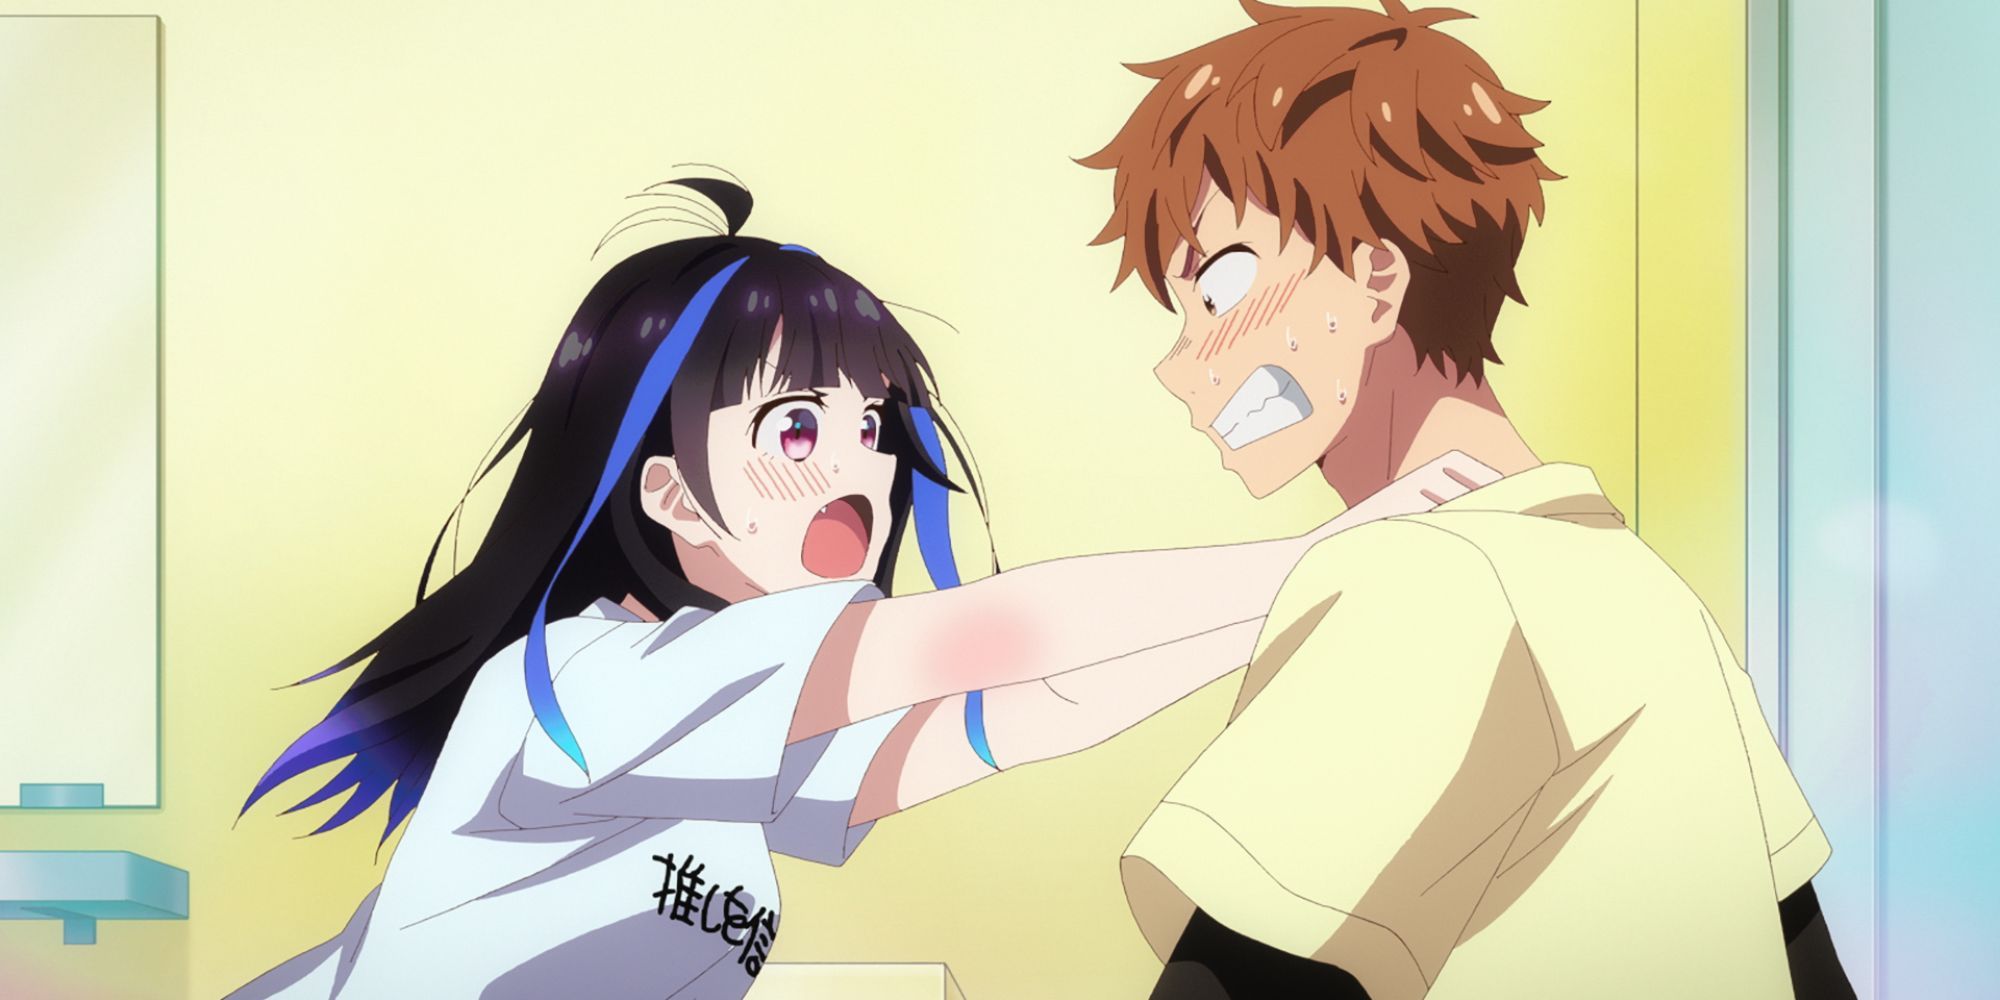 A Dangerous Meeting In This 3rd 'Rent-A-Girlfriend' Anime Season Clip